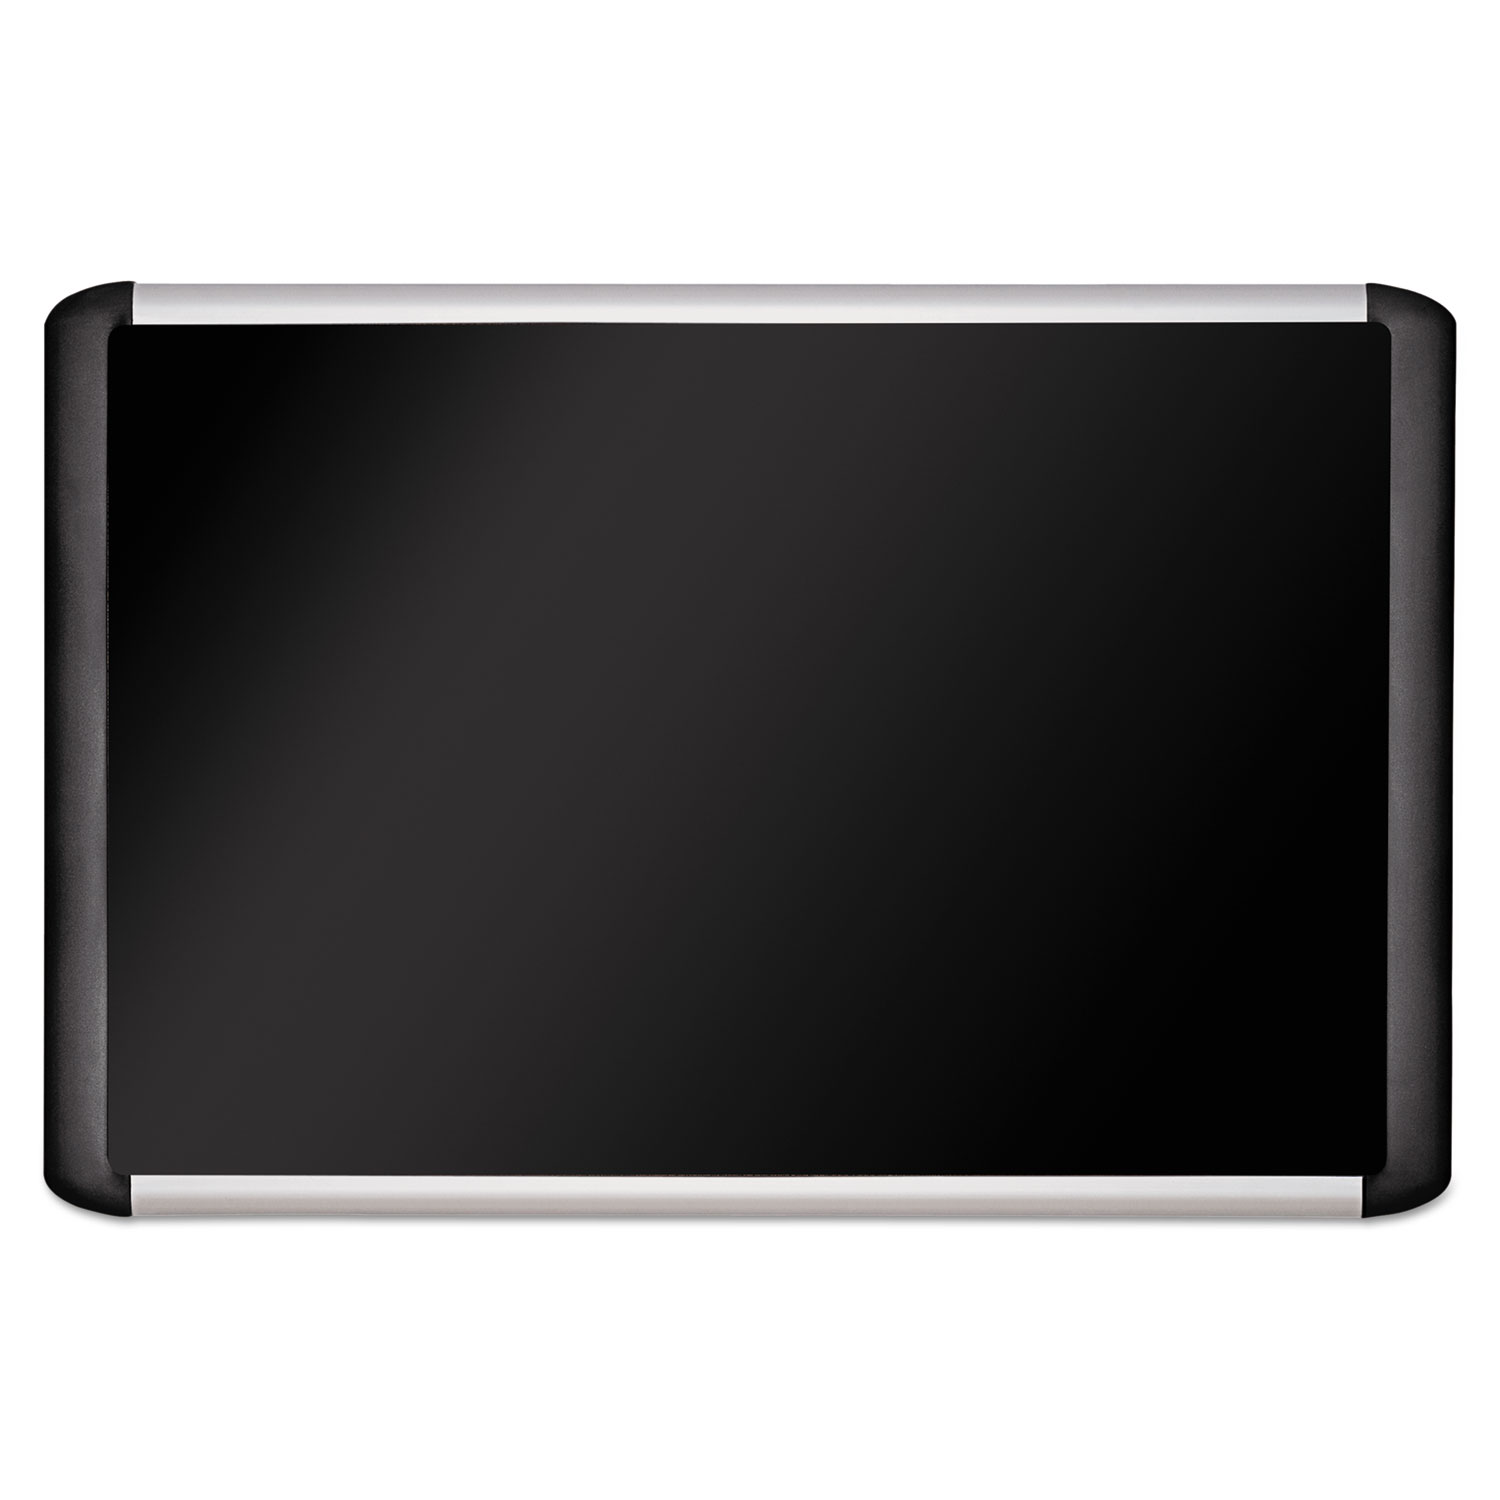  MasterVision MVI050301 Black fabric bulletin board, 36 x 48, Silver/Black (BVCMVI050301) 